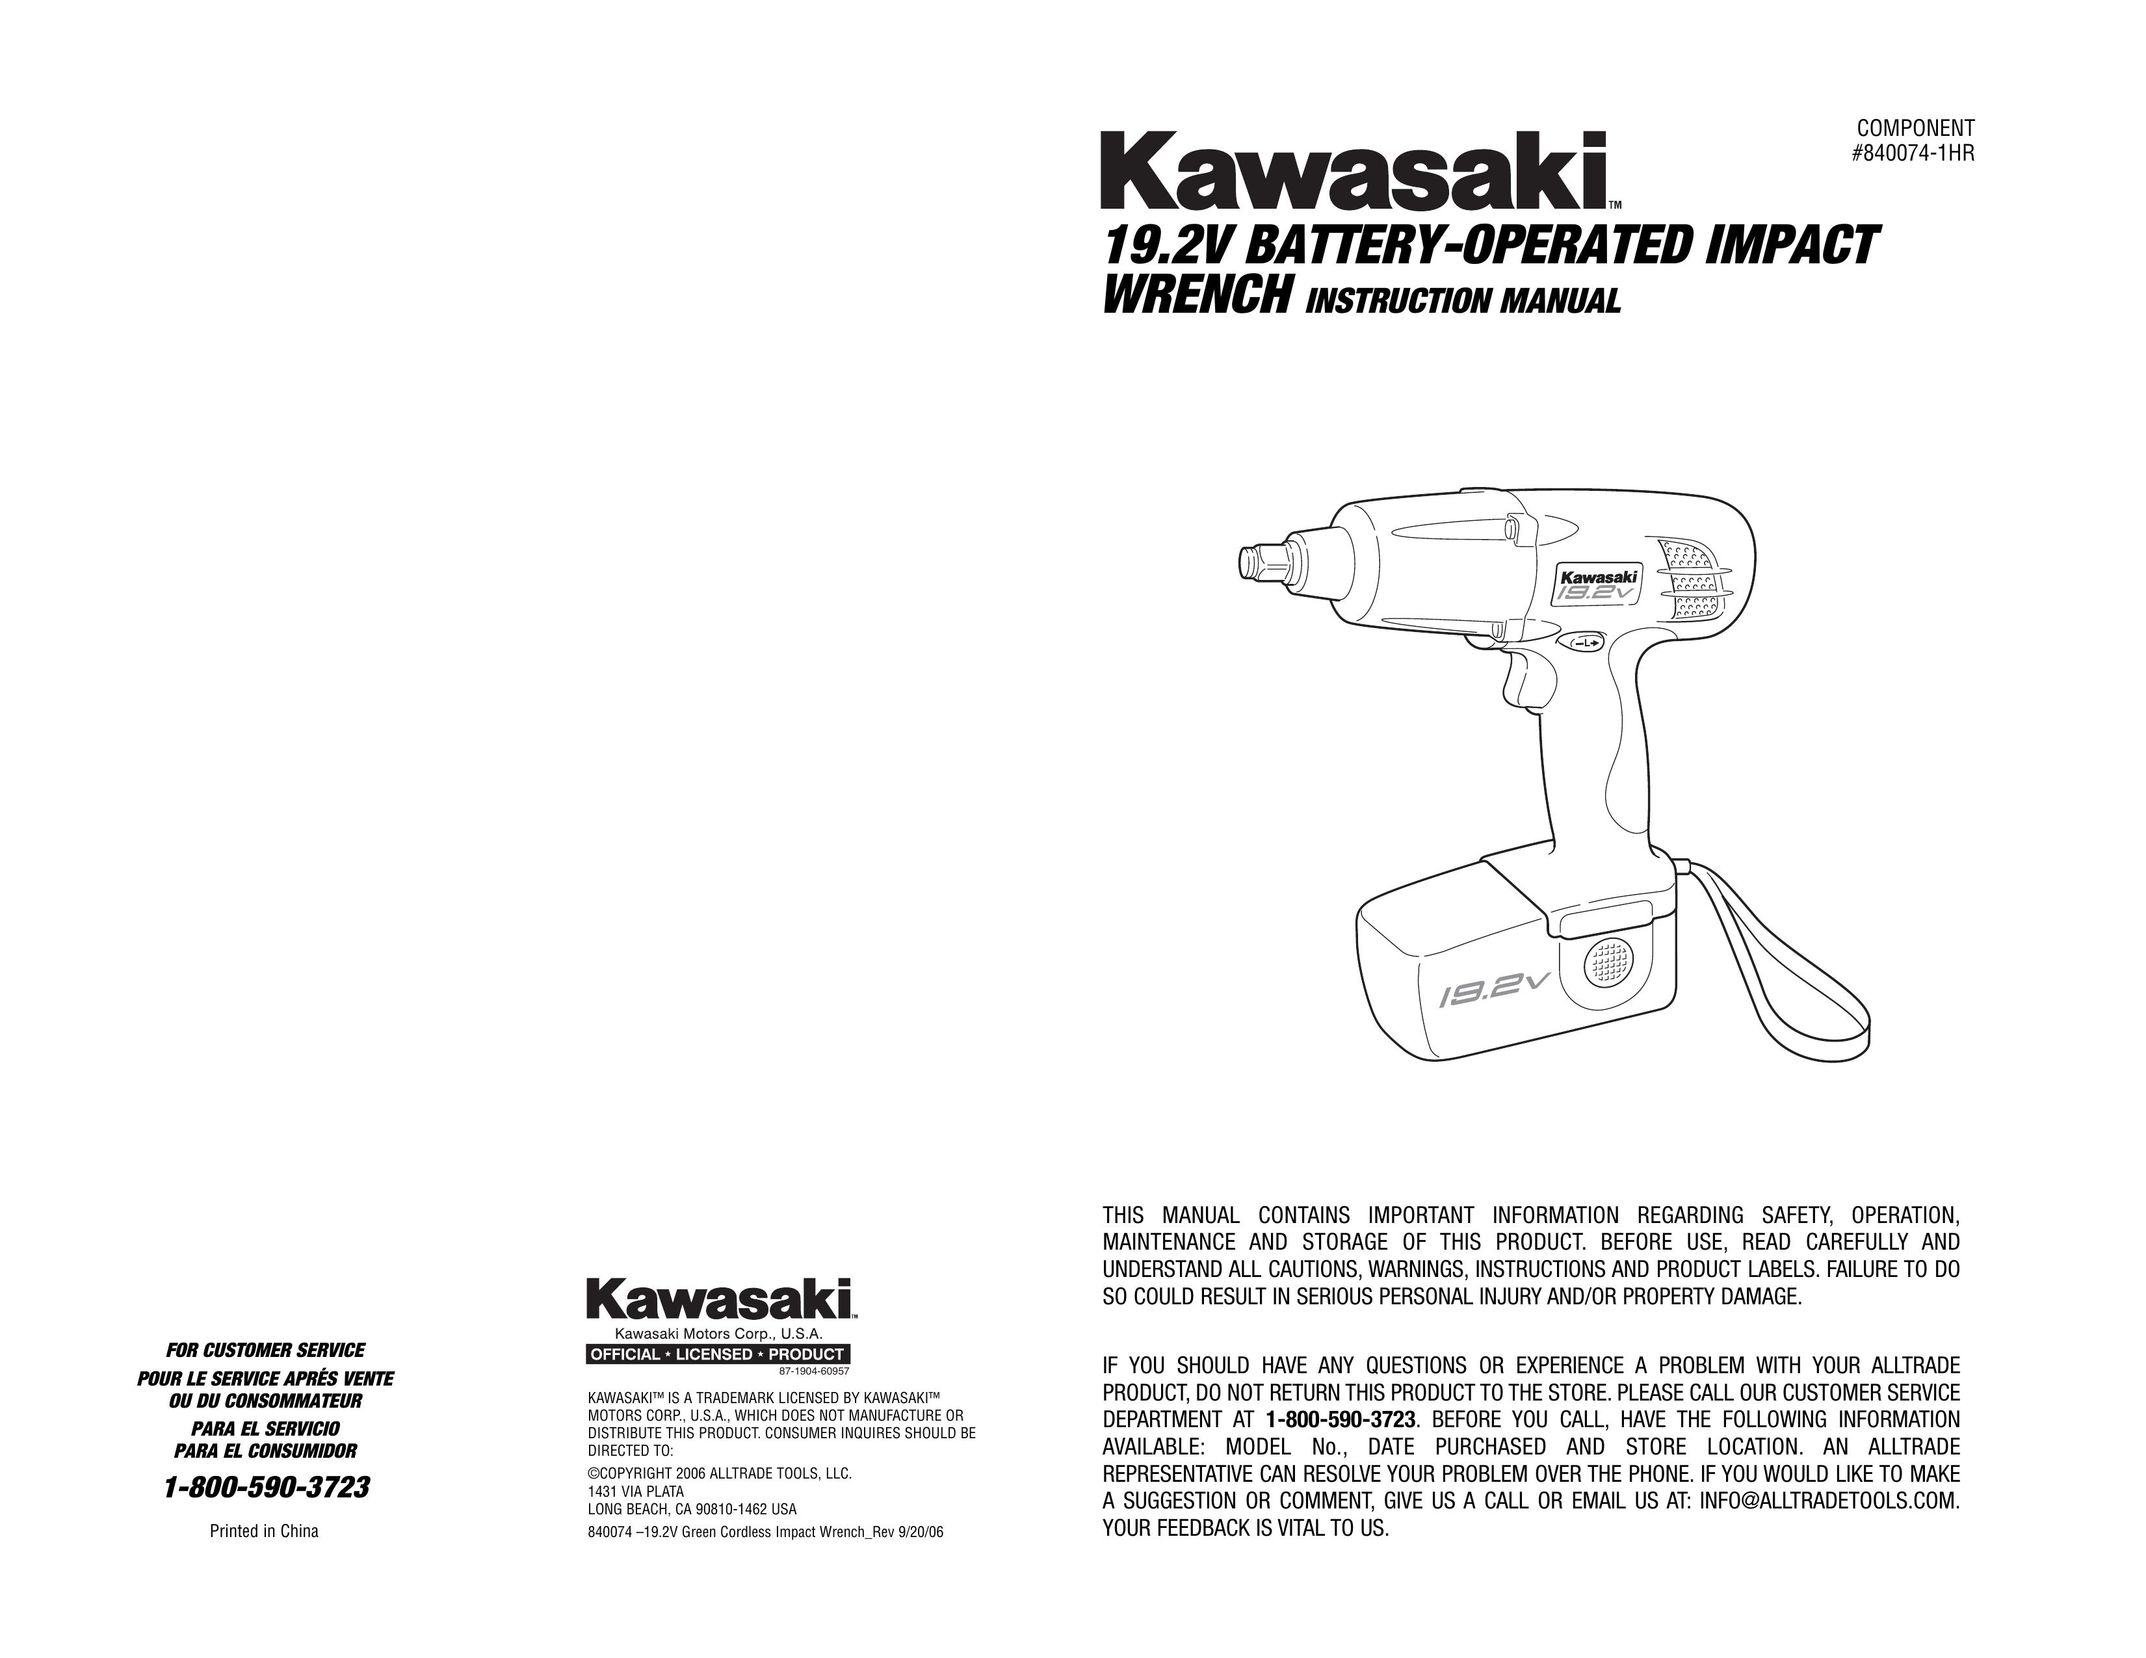 Kawasaki 840074-1HR Impact Driver User Manual